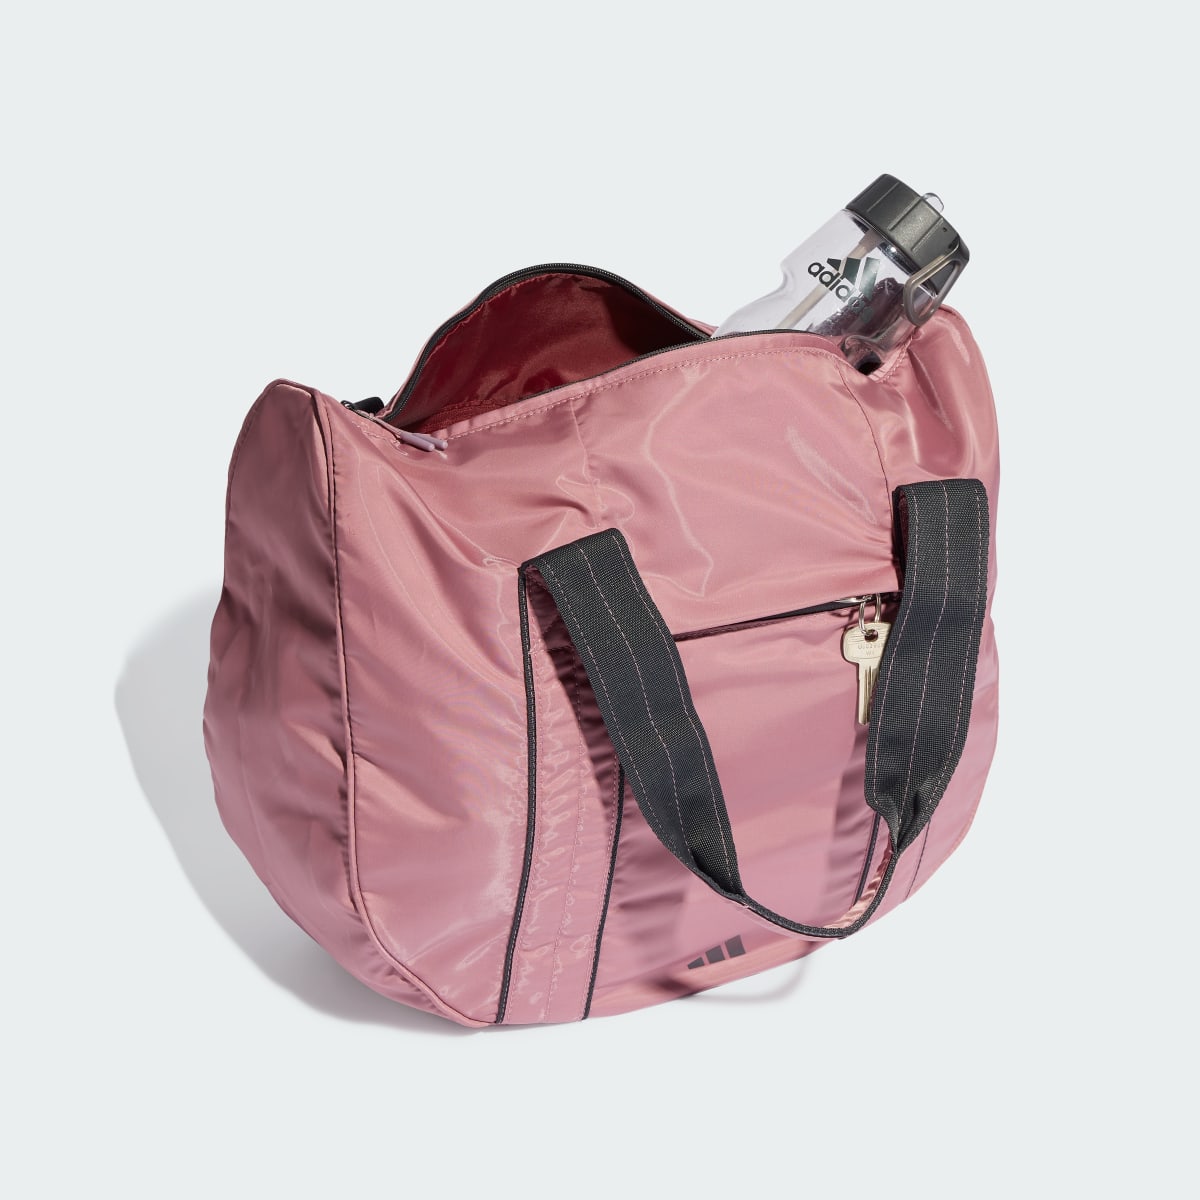 Adidas Yoga Tote Bag - HZ5945